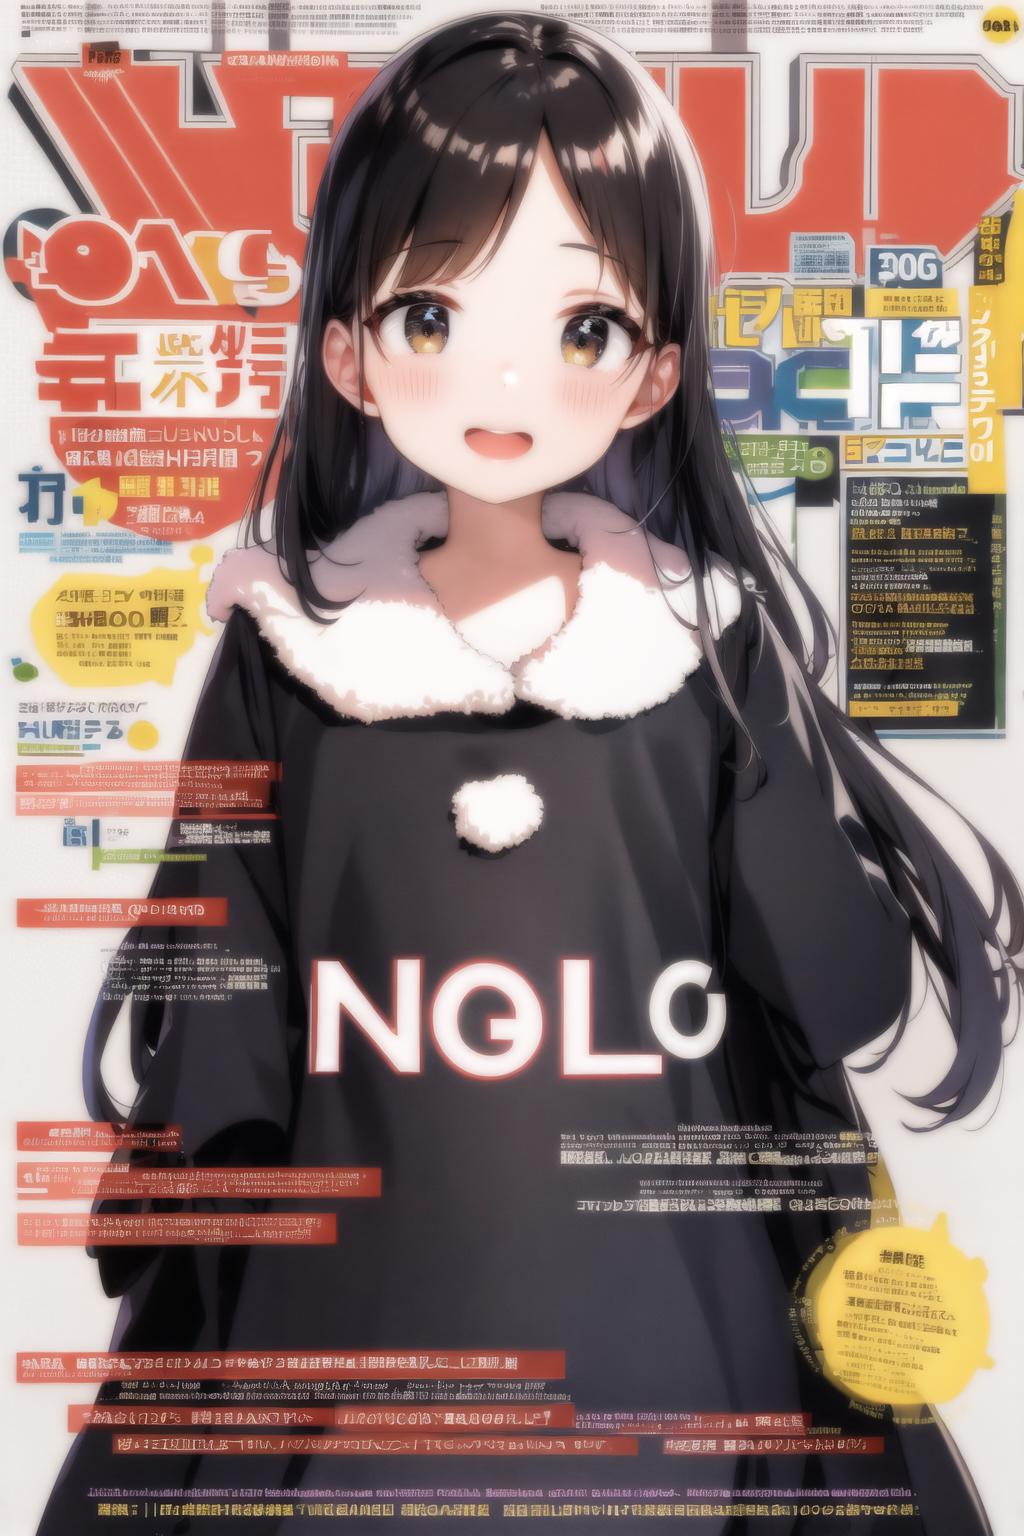 Shojo Beat Manga Vol. 3 Issue 12 December 2007 Anime Magazine Issue -  Walmart.com